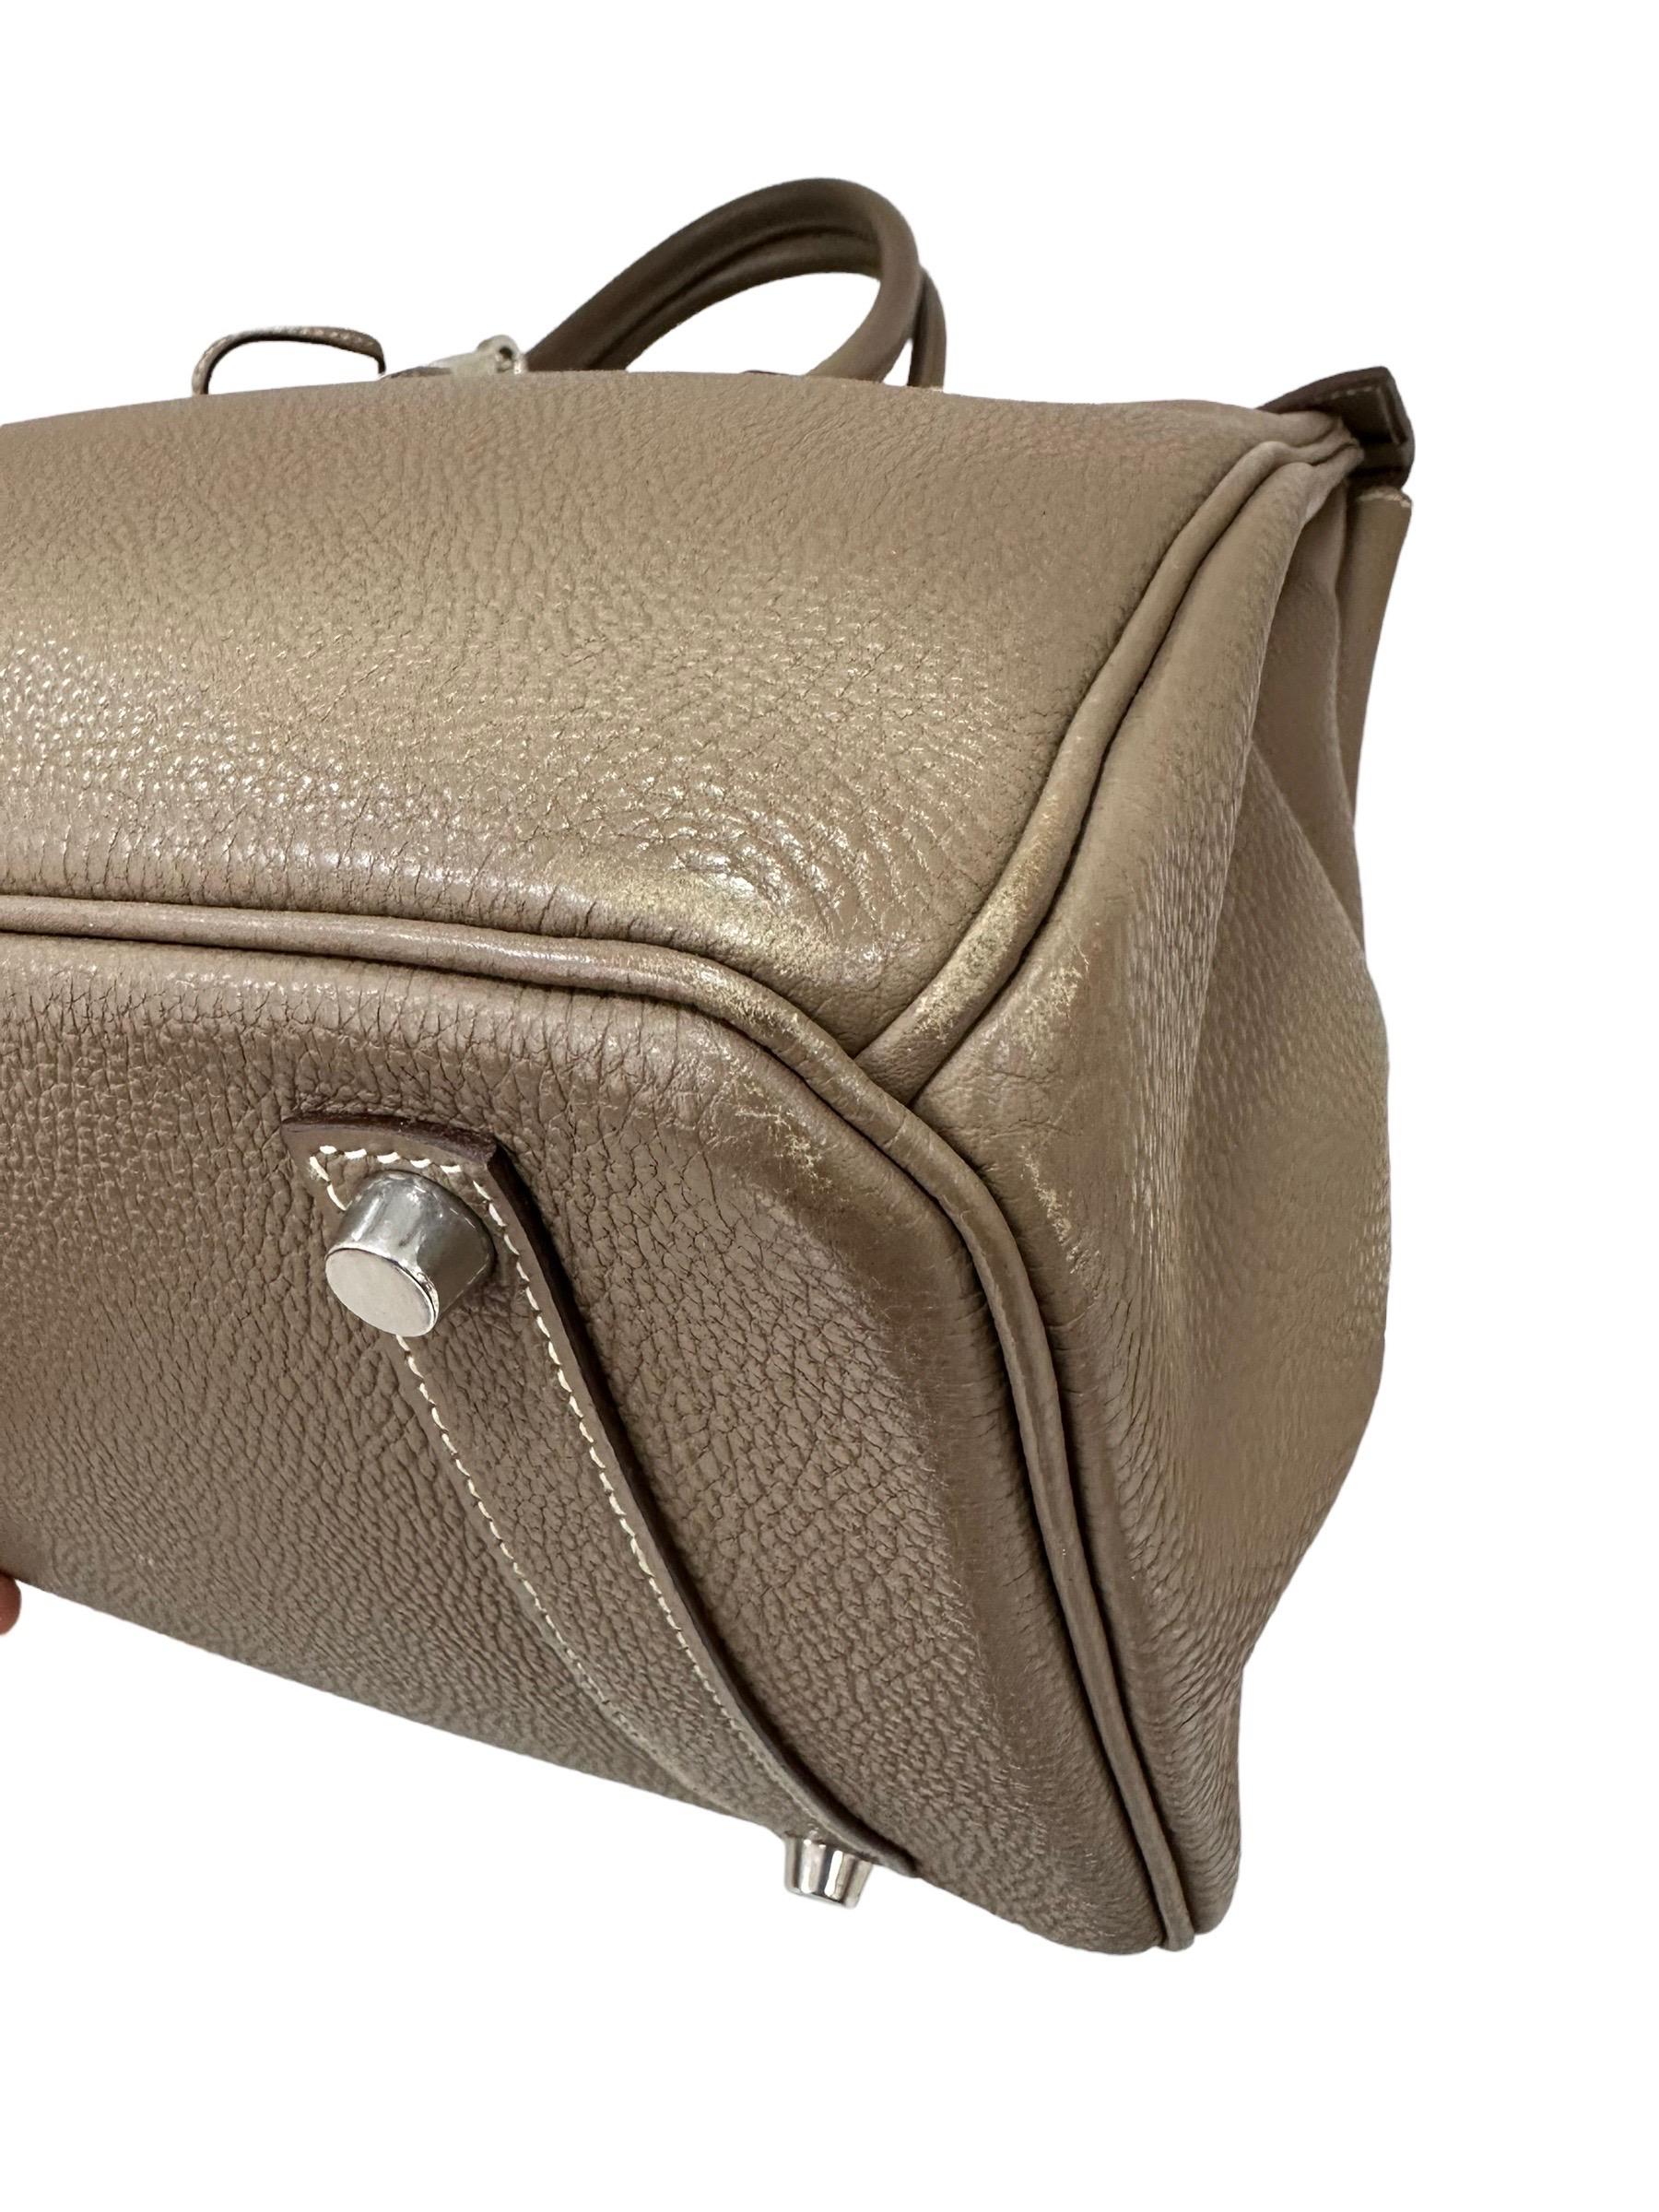 2008 Hermès Birkin 35 Togo Leather Toundra Top Handle Bag en vente 8